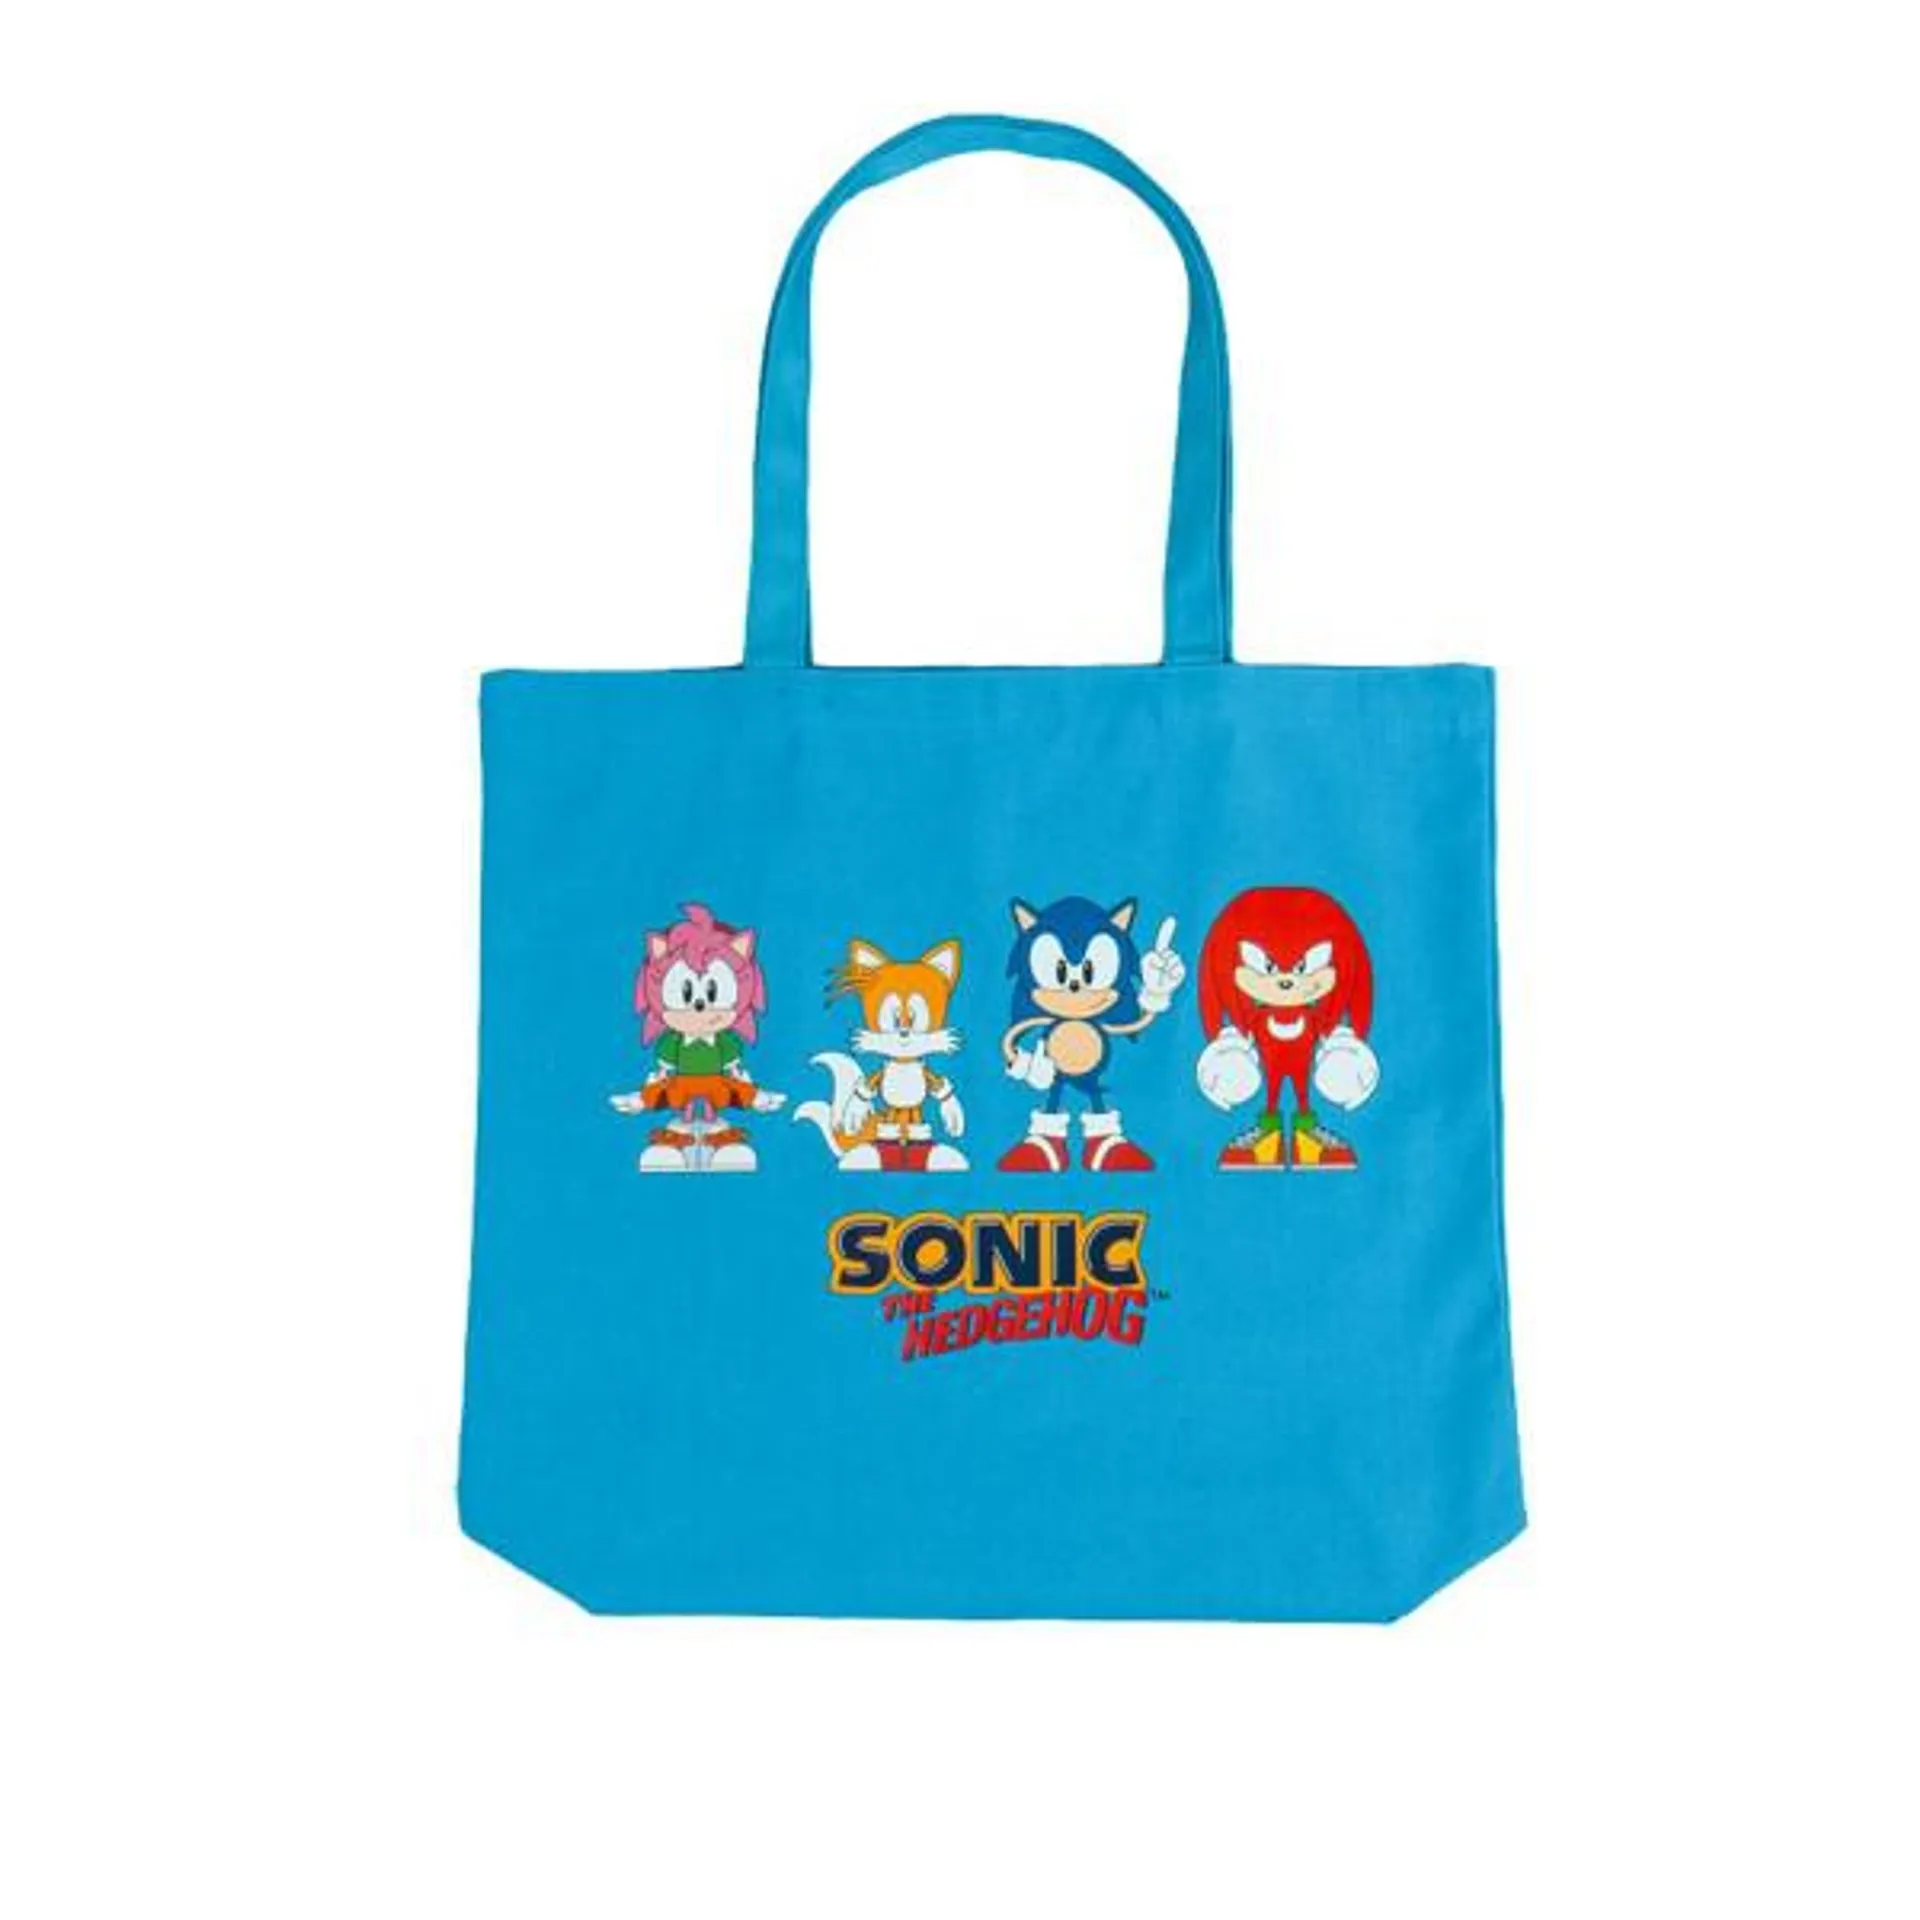 Sonic the Hedgehog - Sonic Team Tote Bag